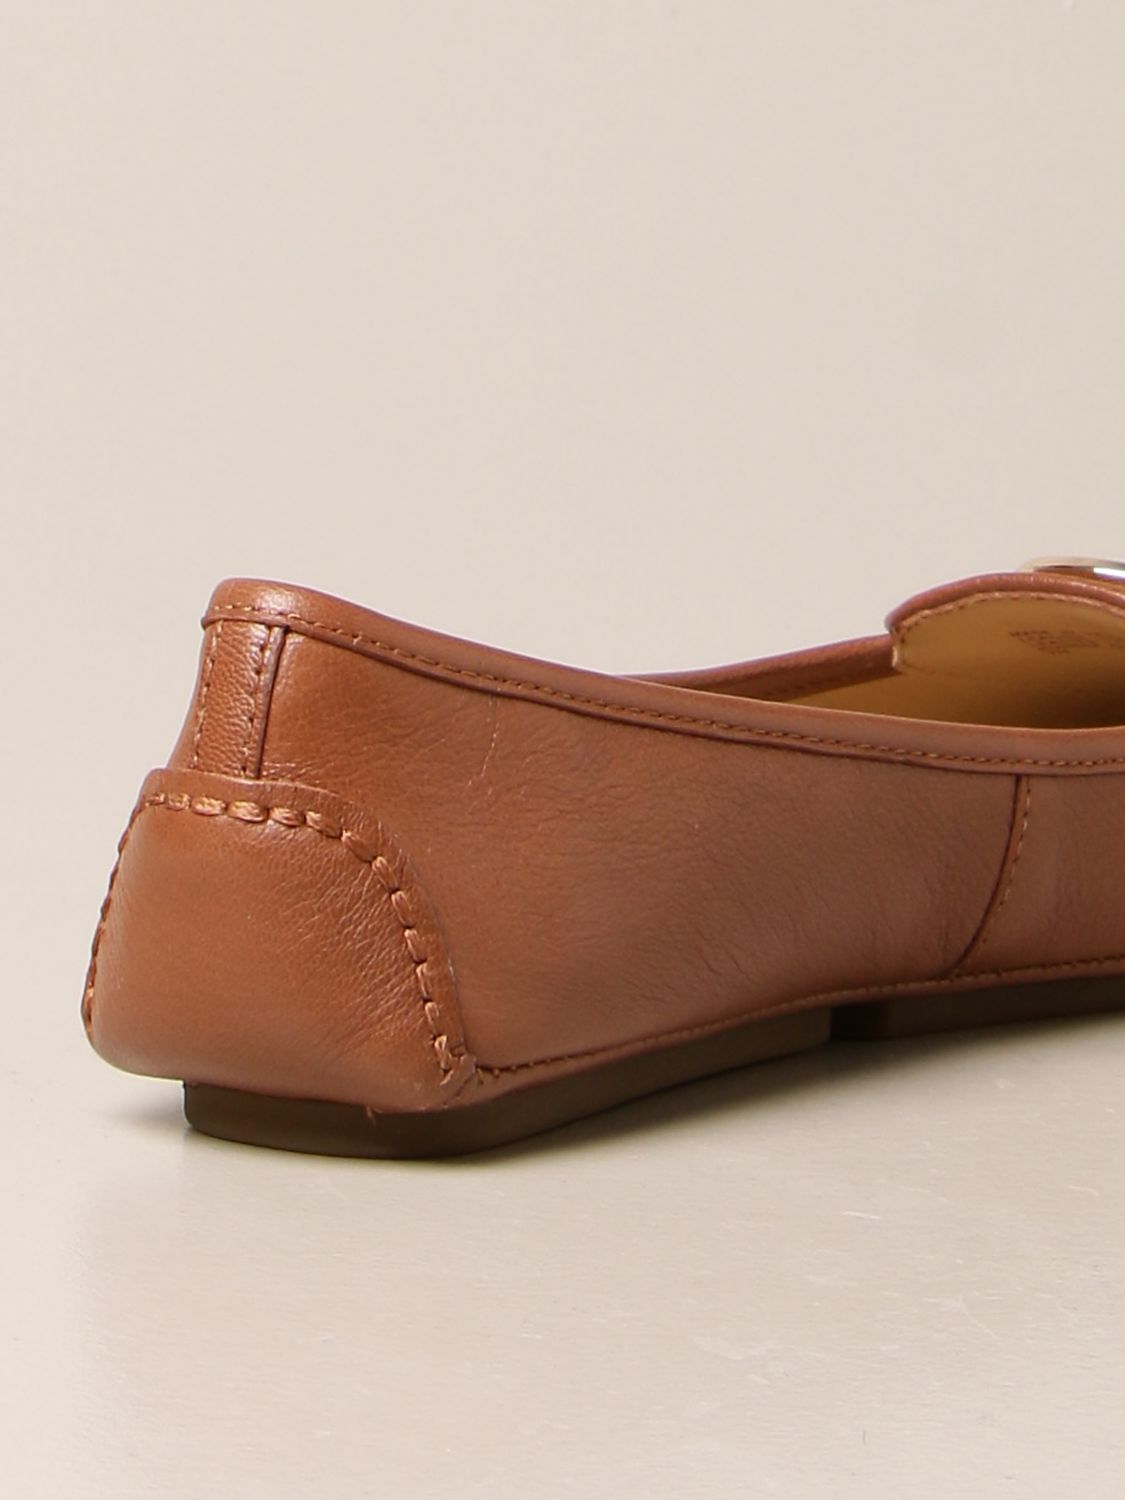 michael kors brown flat shoes